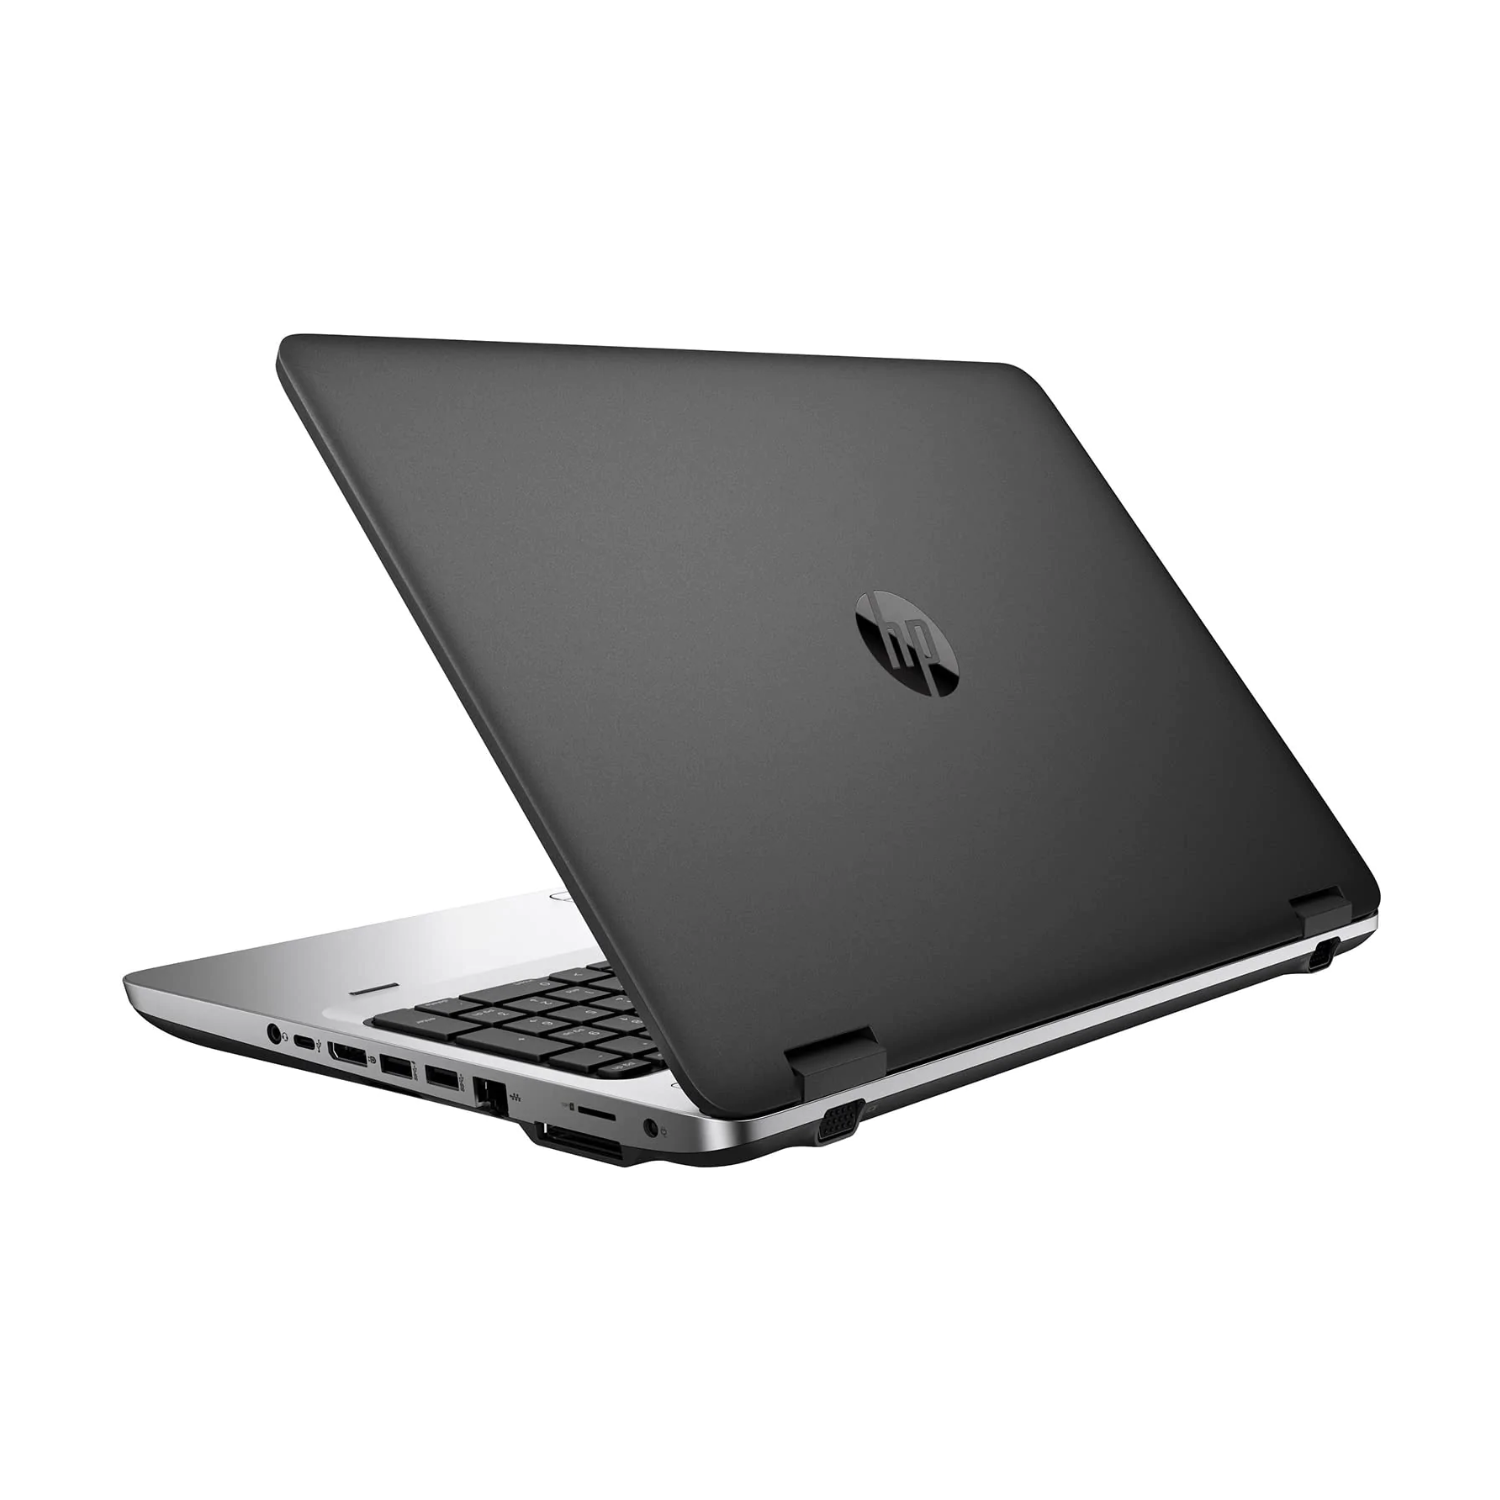 HP ProBook 640 G1 i5 (4th Gen) 4GB RAM 128GB SSD 14”